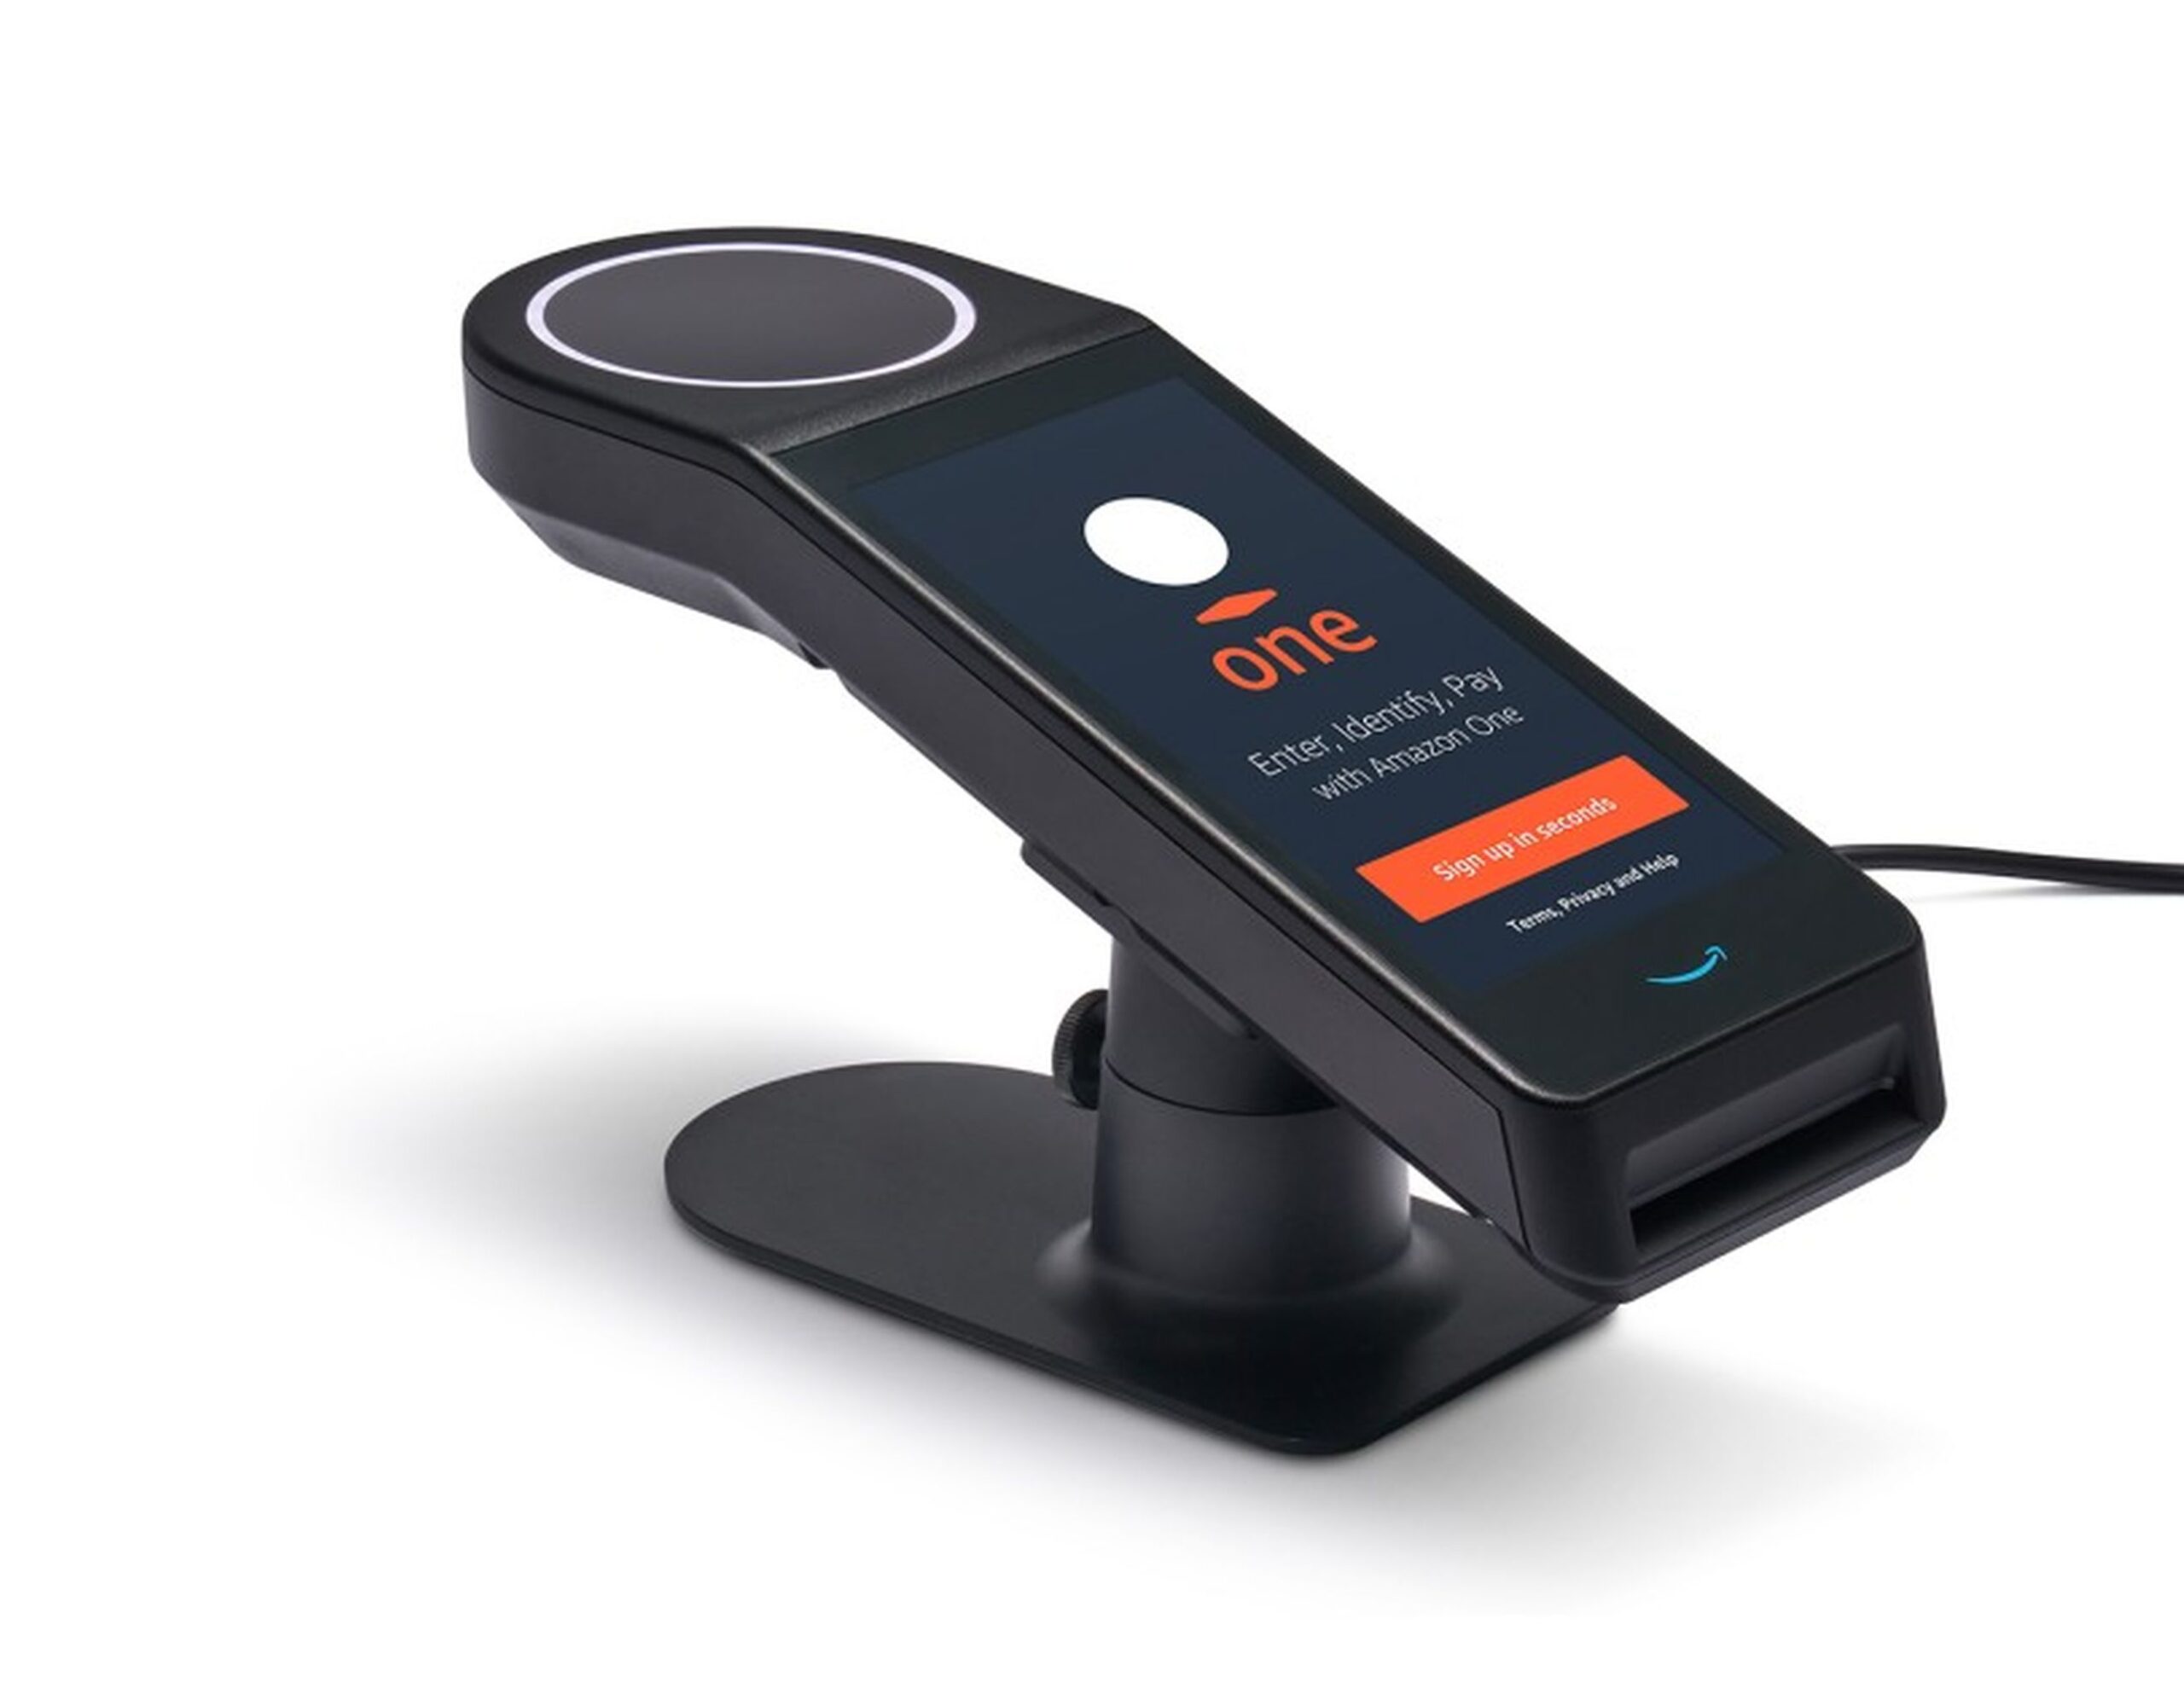 Biometric Device - Amazon’s New Innovation